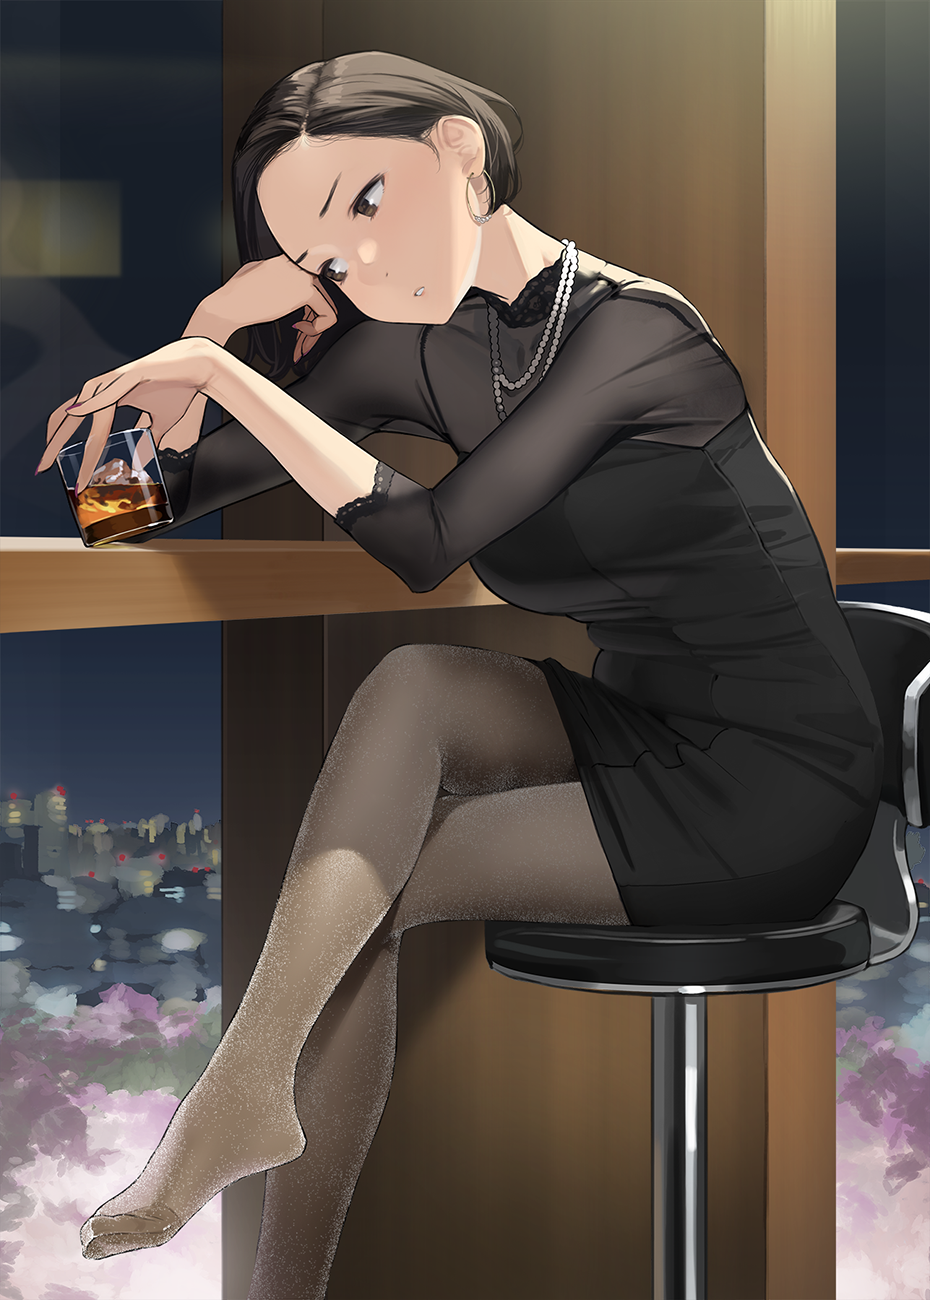 Anime 930x1300 anime anime girls drink original characters short hair portrait display yomu whiskey